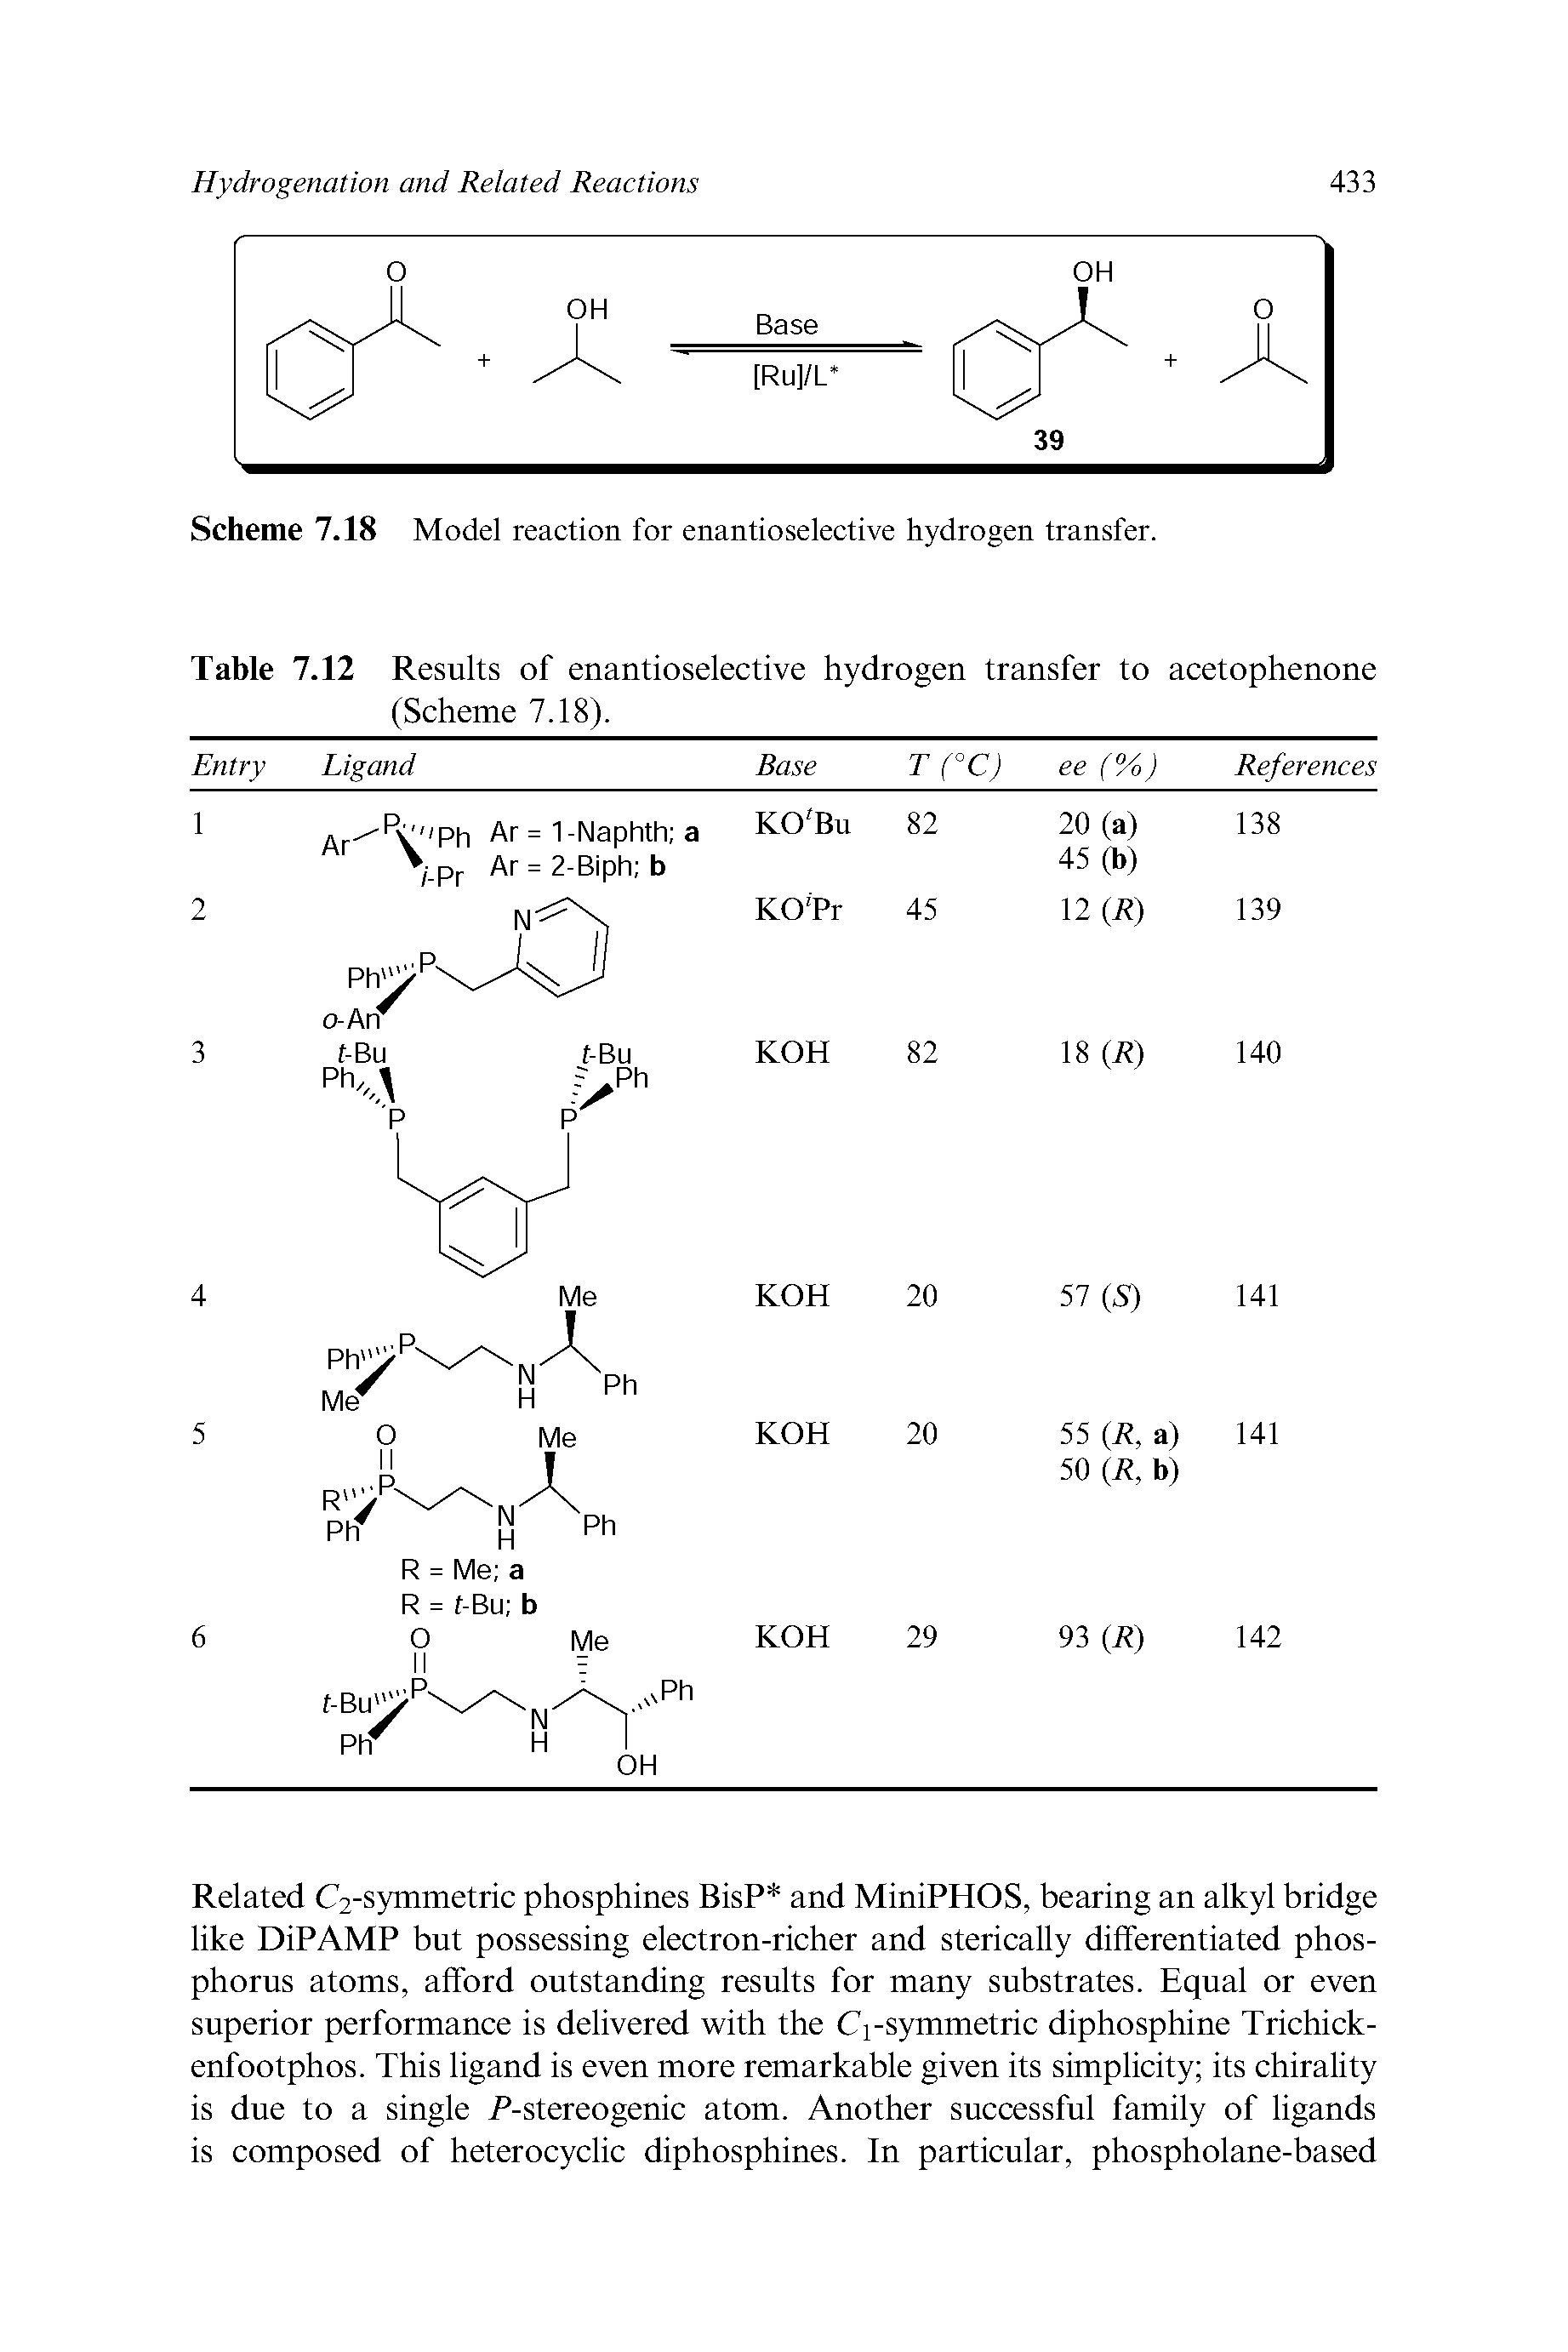 Scheme 7.18 Model reaction for enantioselective hydrogen transfer.